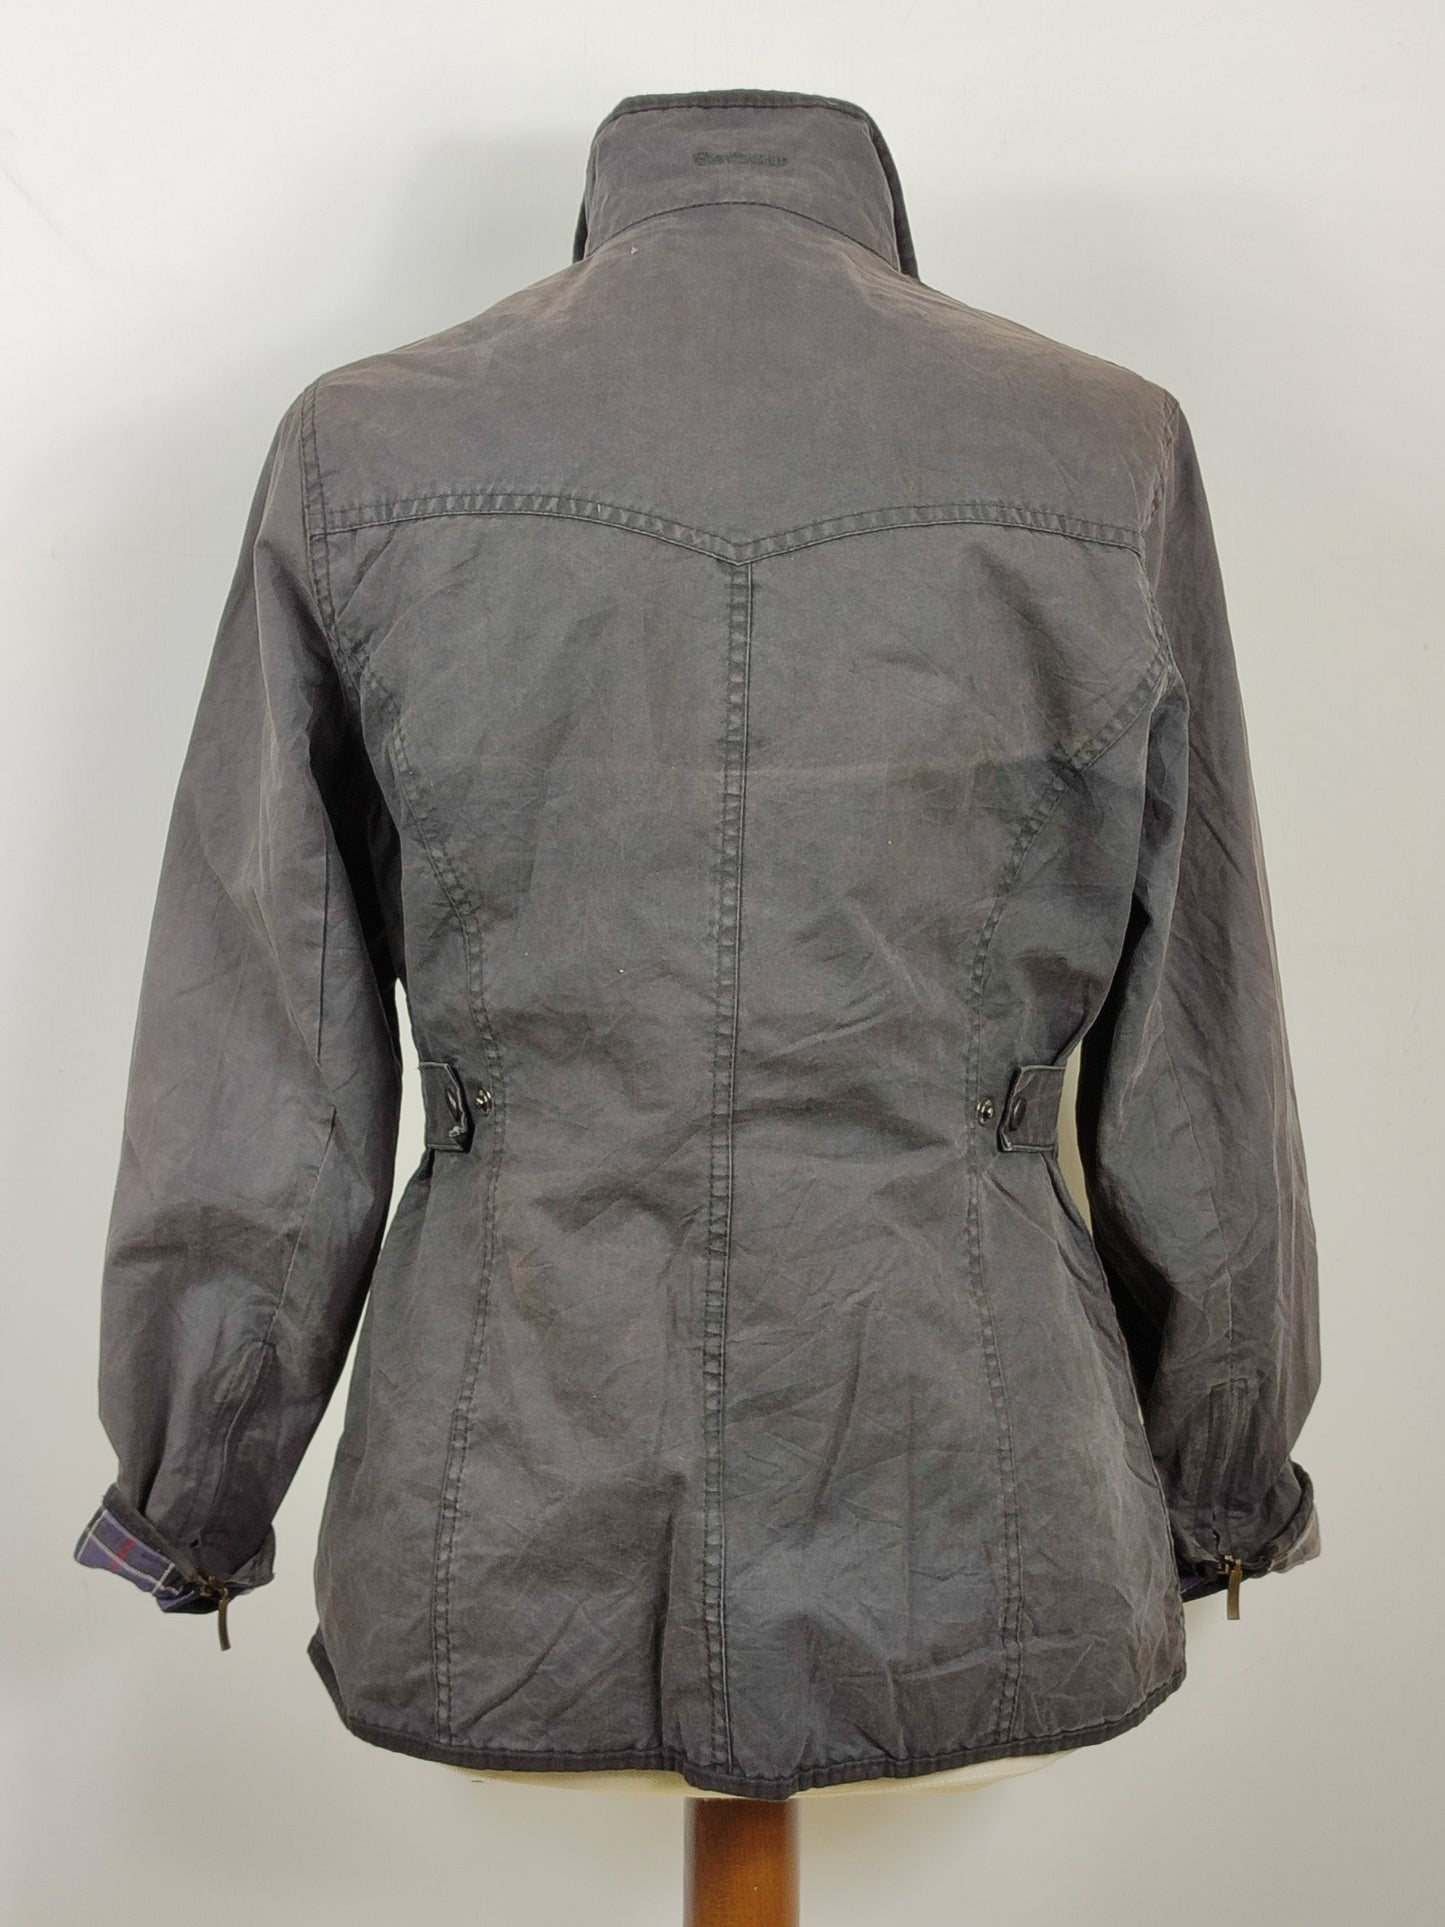 Giacca Barbour corta donna Nera UK10 Small  Black short Lady wax Utility jacket Small tg.40